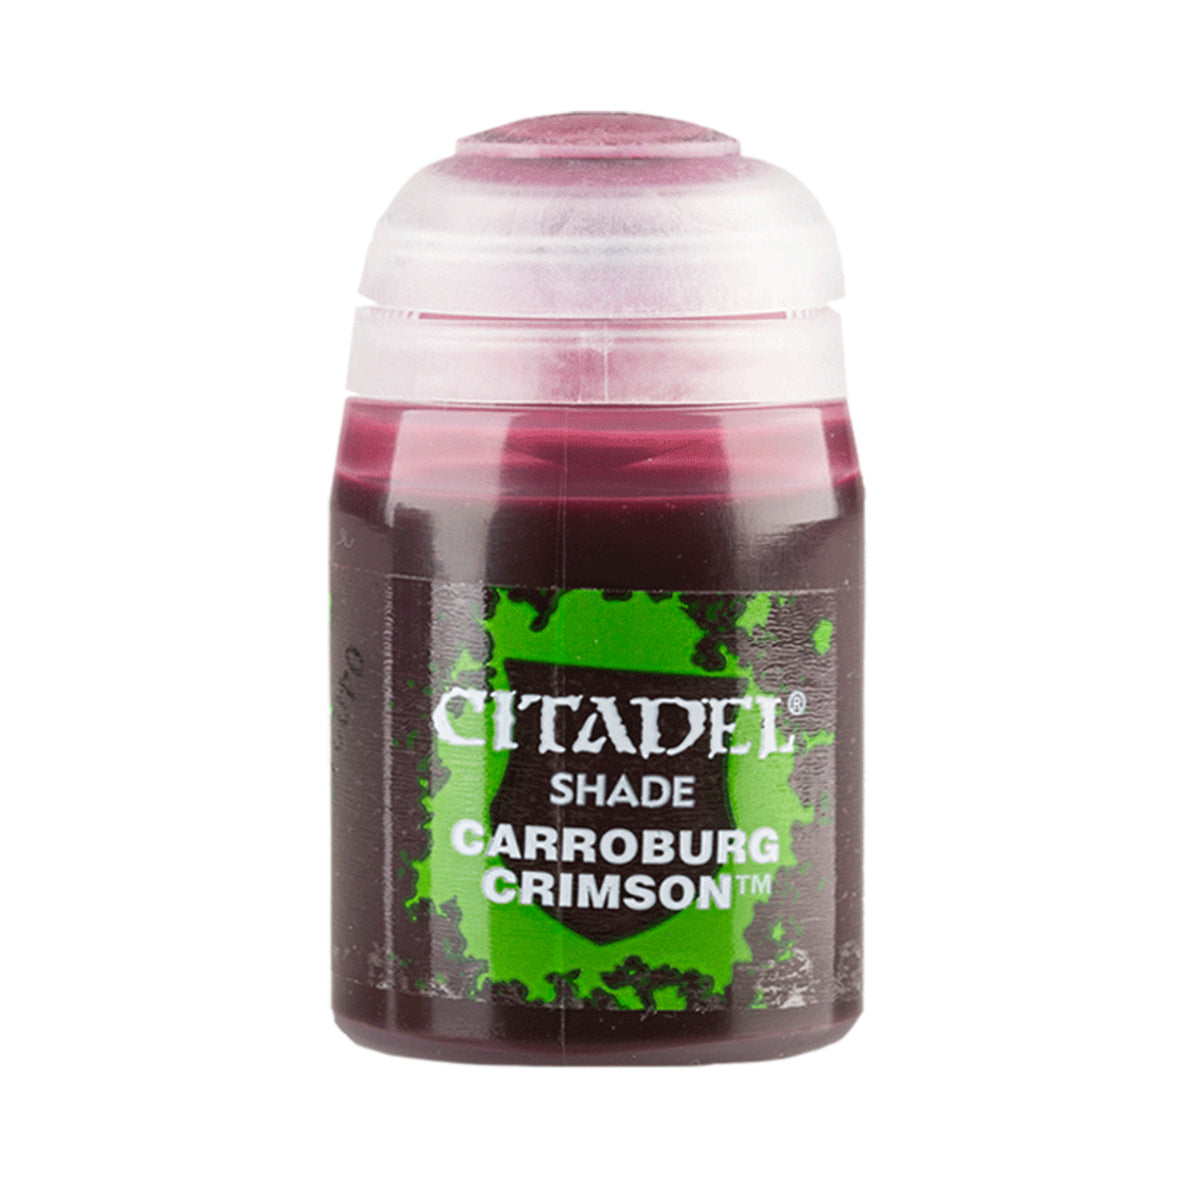 Carroburg Crimson - Citadel Shade